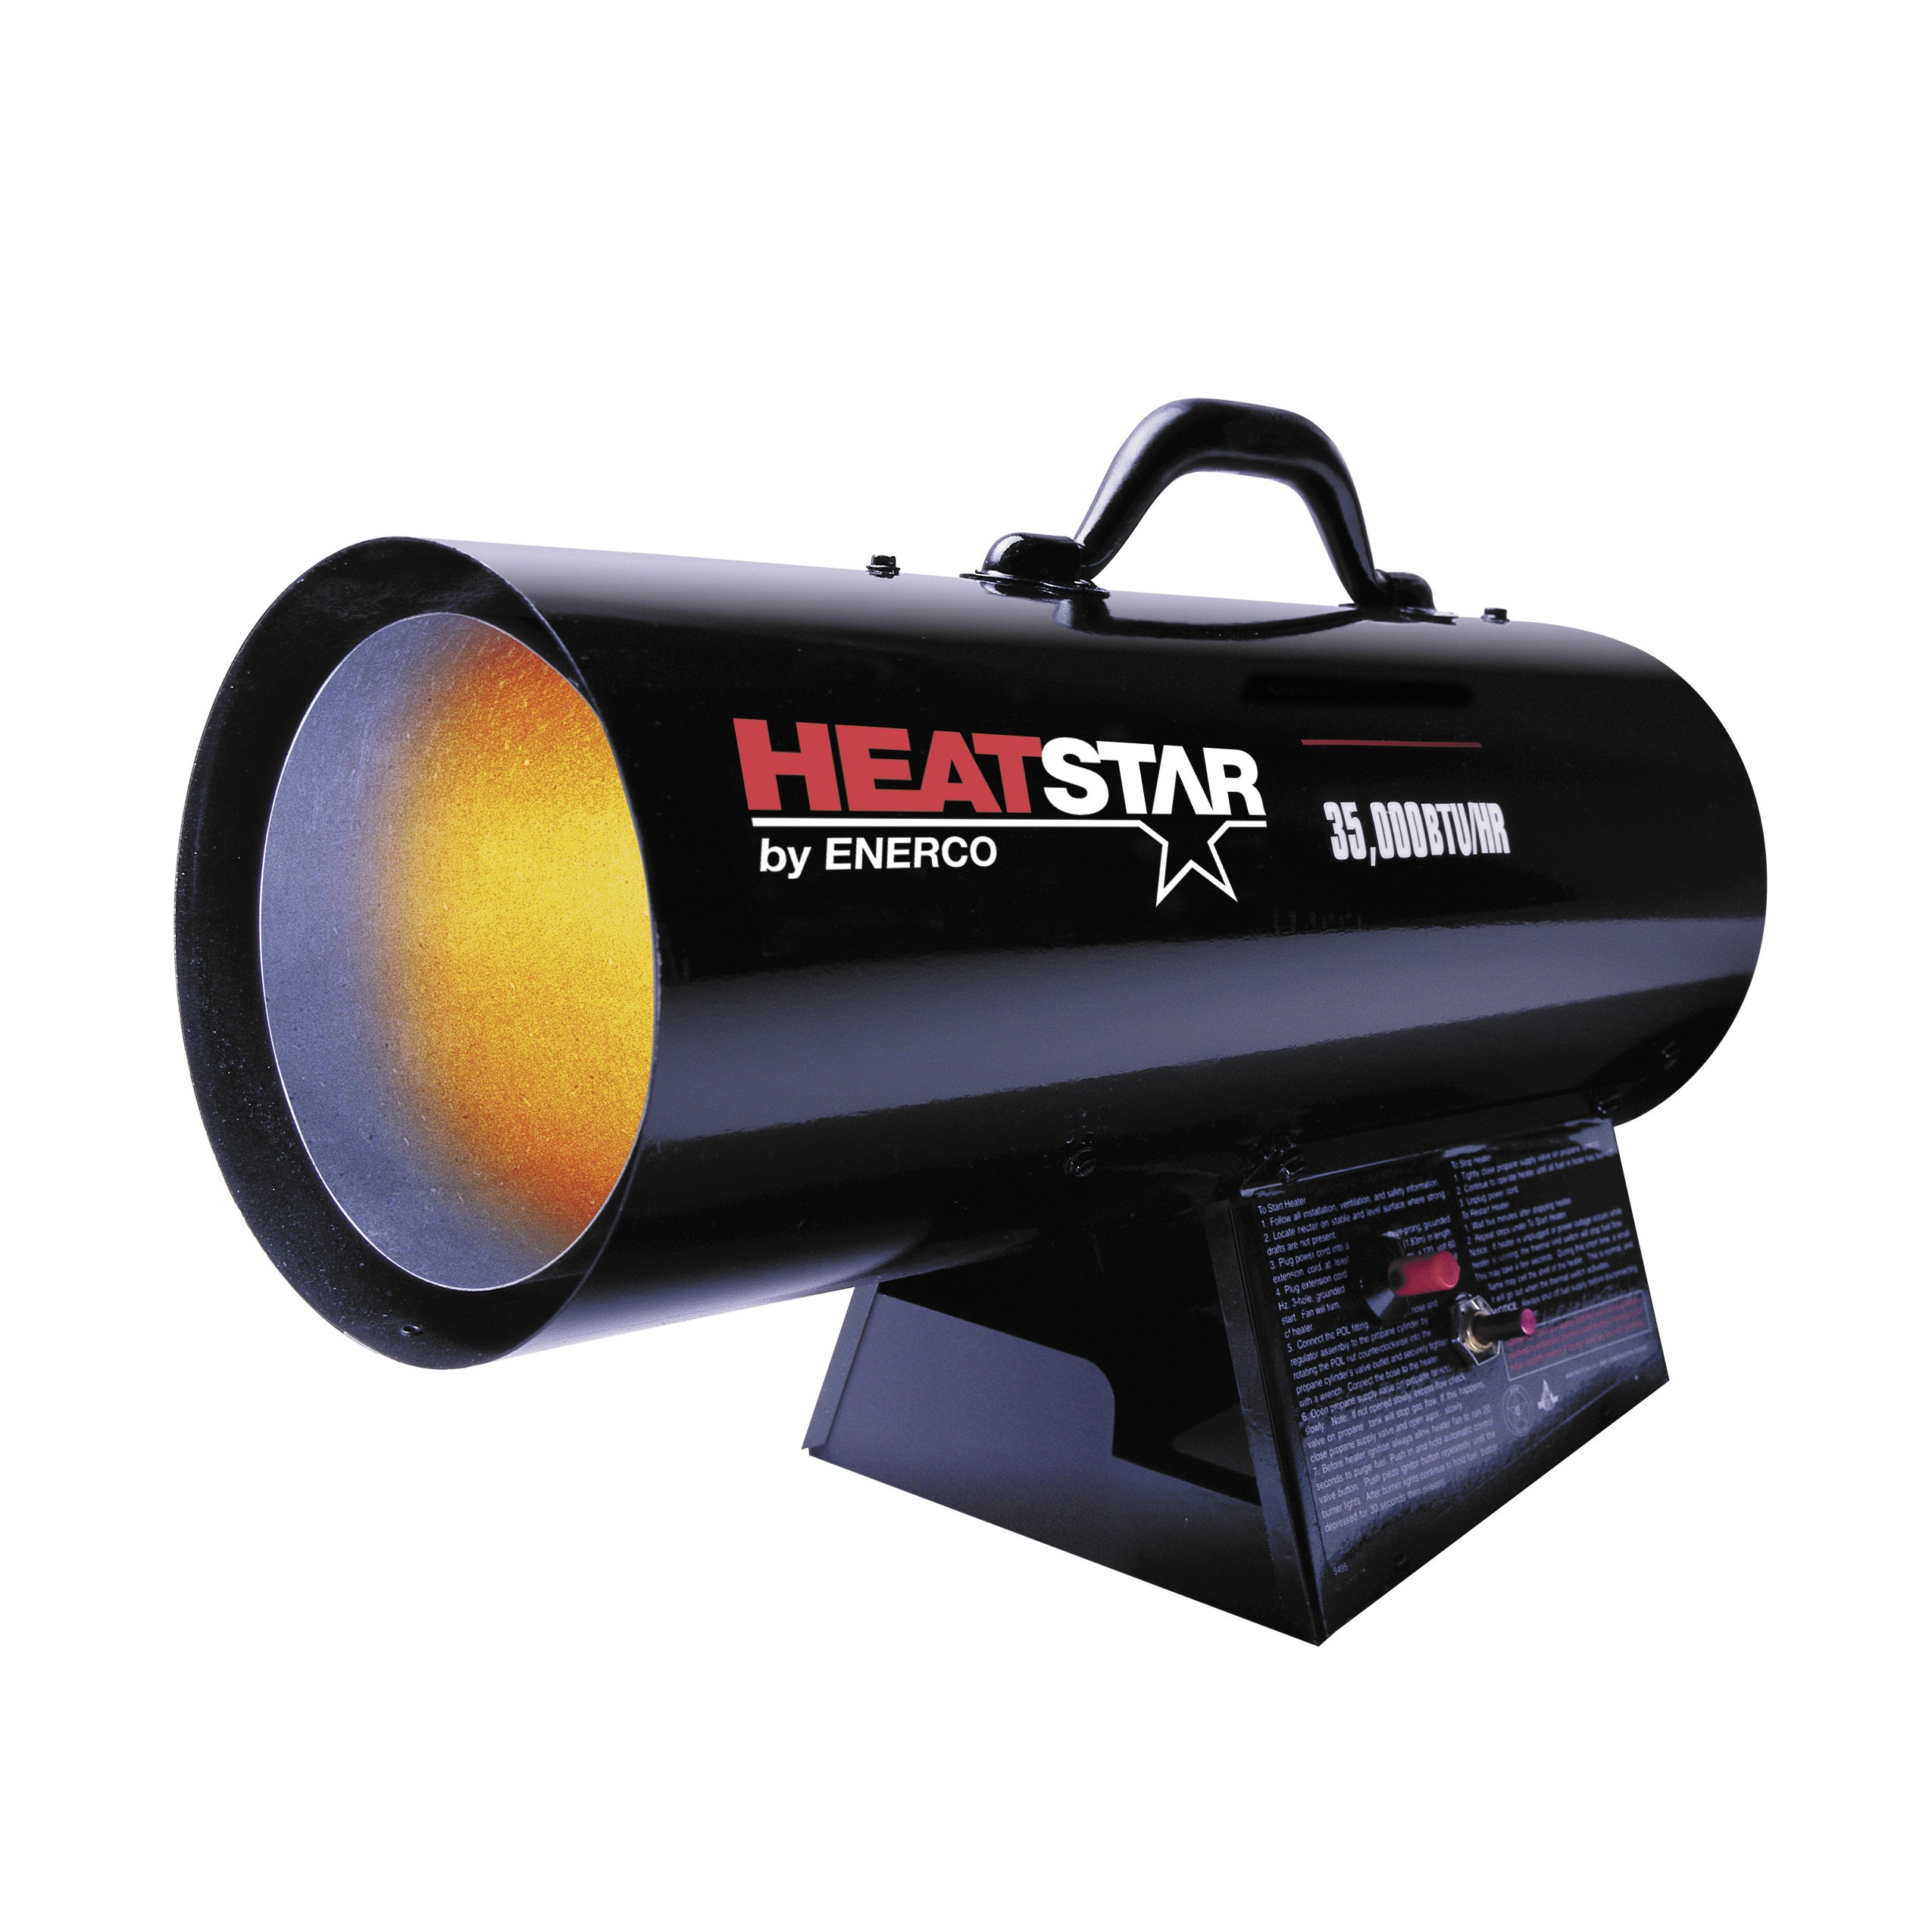 HeatStar 35,000 BTU Forced Air Industrial Portable Propane Heater